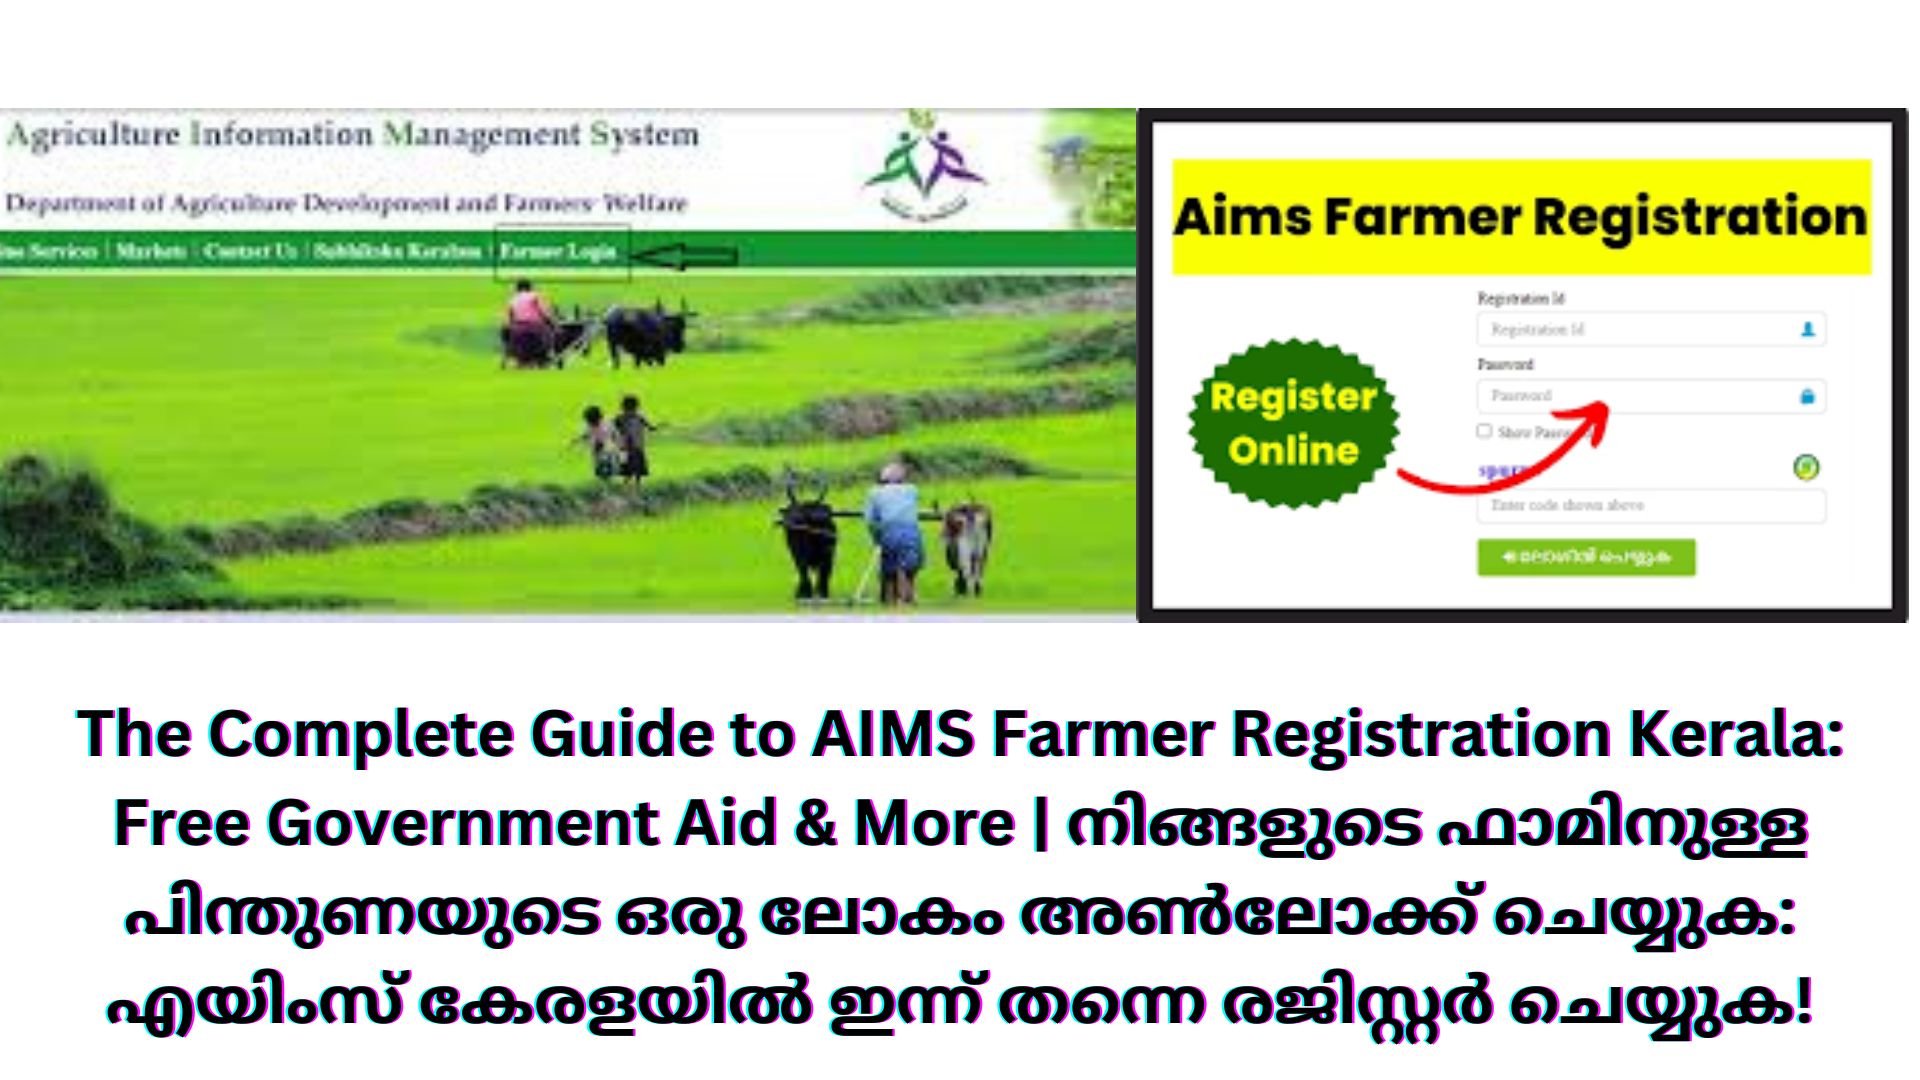 The Complete Guide to AIMS Farmer Registration Kerala: Free Government Aid & More | നിങ്ങളുടെ ഫാമിനുള്ള പിന്തുണയുടെ ഒരു ലോകം അൺലോക്ക് ചെയ്യുക: എയിംസ് കേരളയിൽ ഇന്ന് തന്നെ രജിസ്റ്റർ ചെയ്യുക!